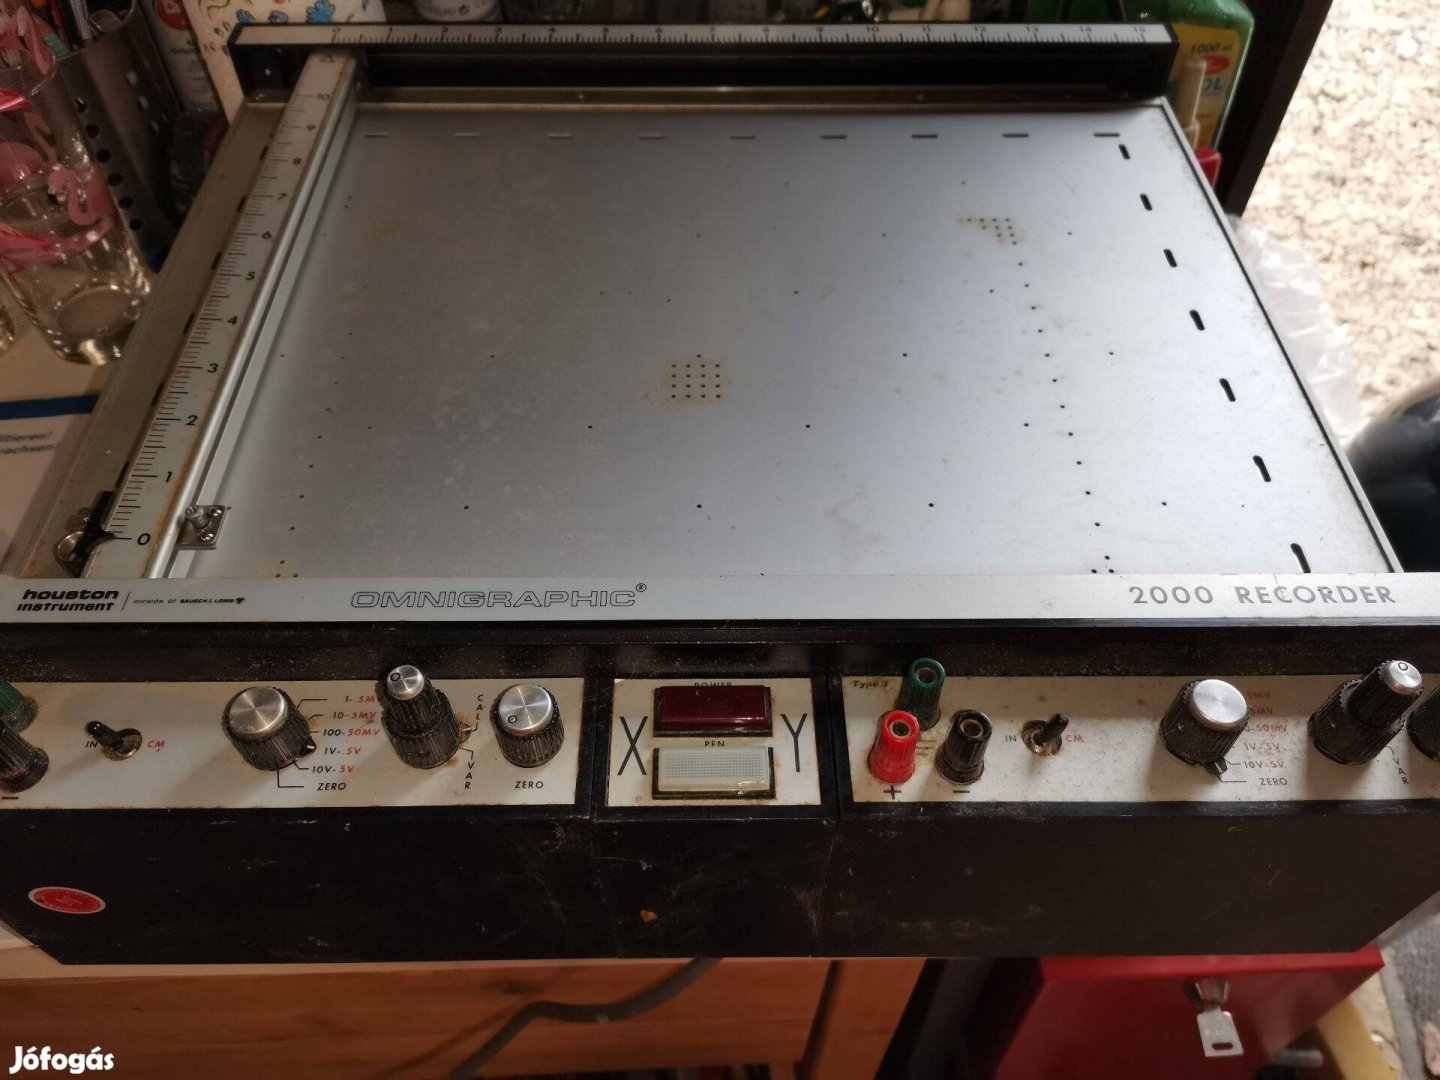 Houston Instrument Omnigraphic 2000 Recorder USA